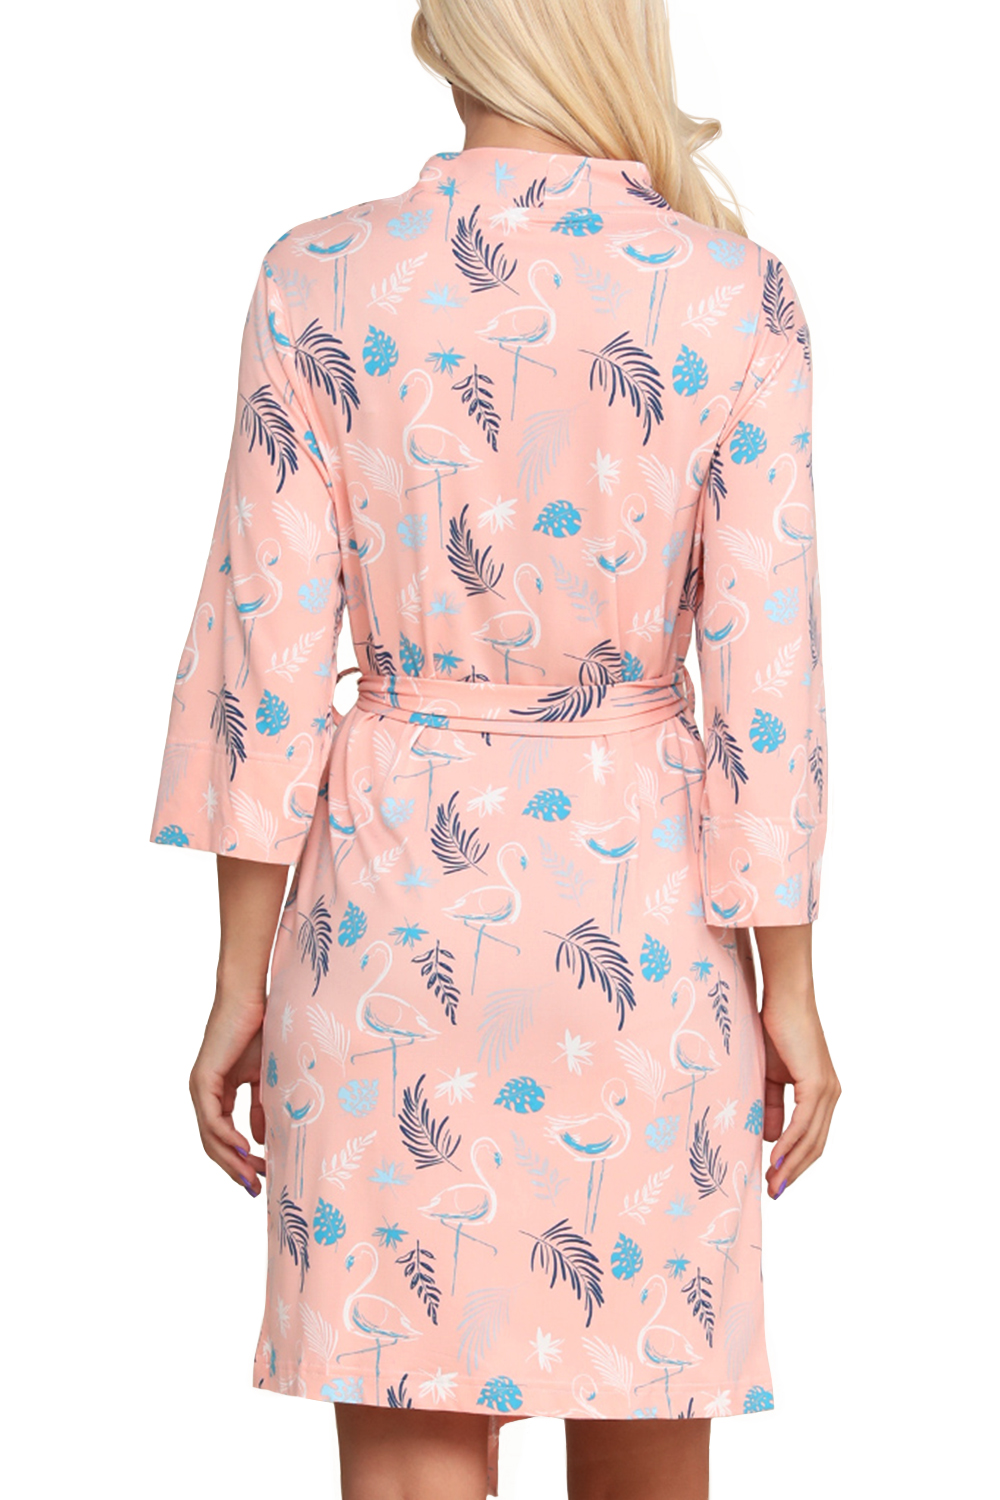 Doublju Women's Kimono Robe Sleepwear Pajama (Plus Size Available) - image 5 of 5